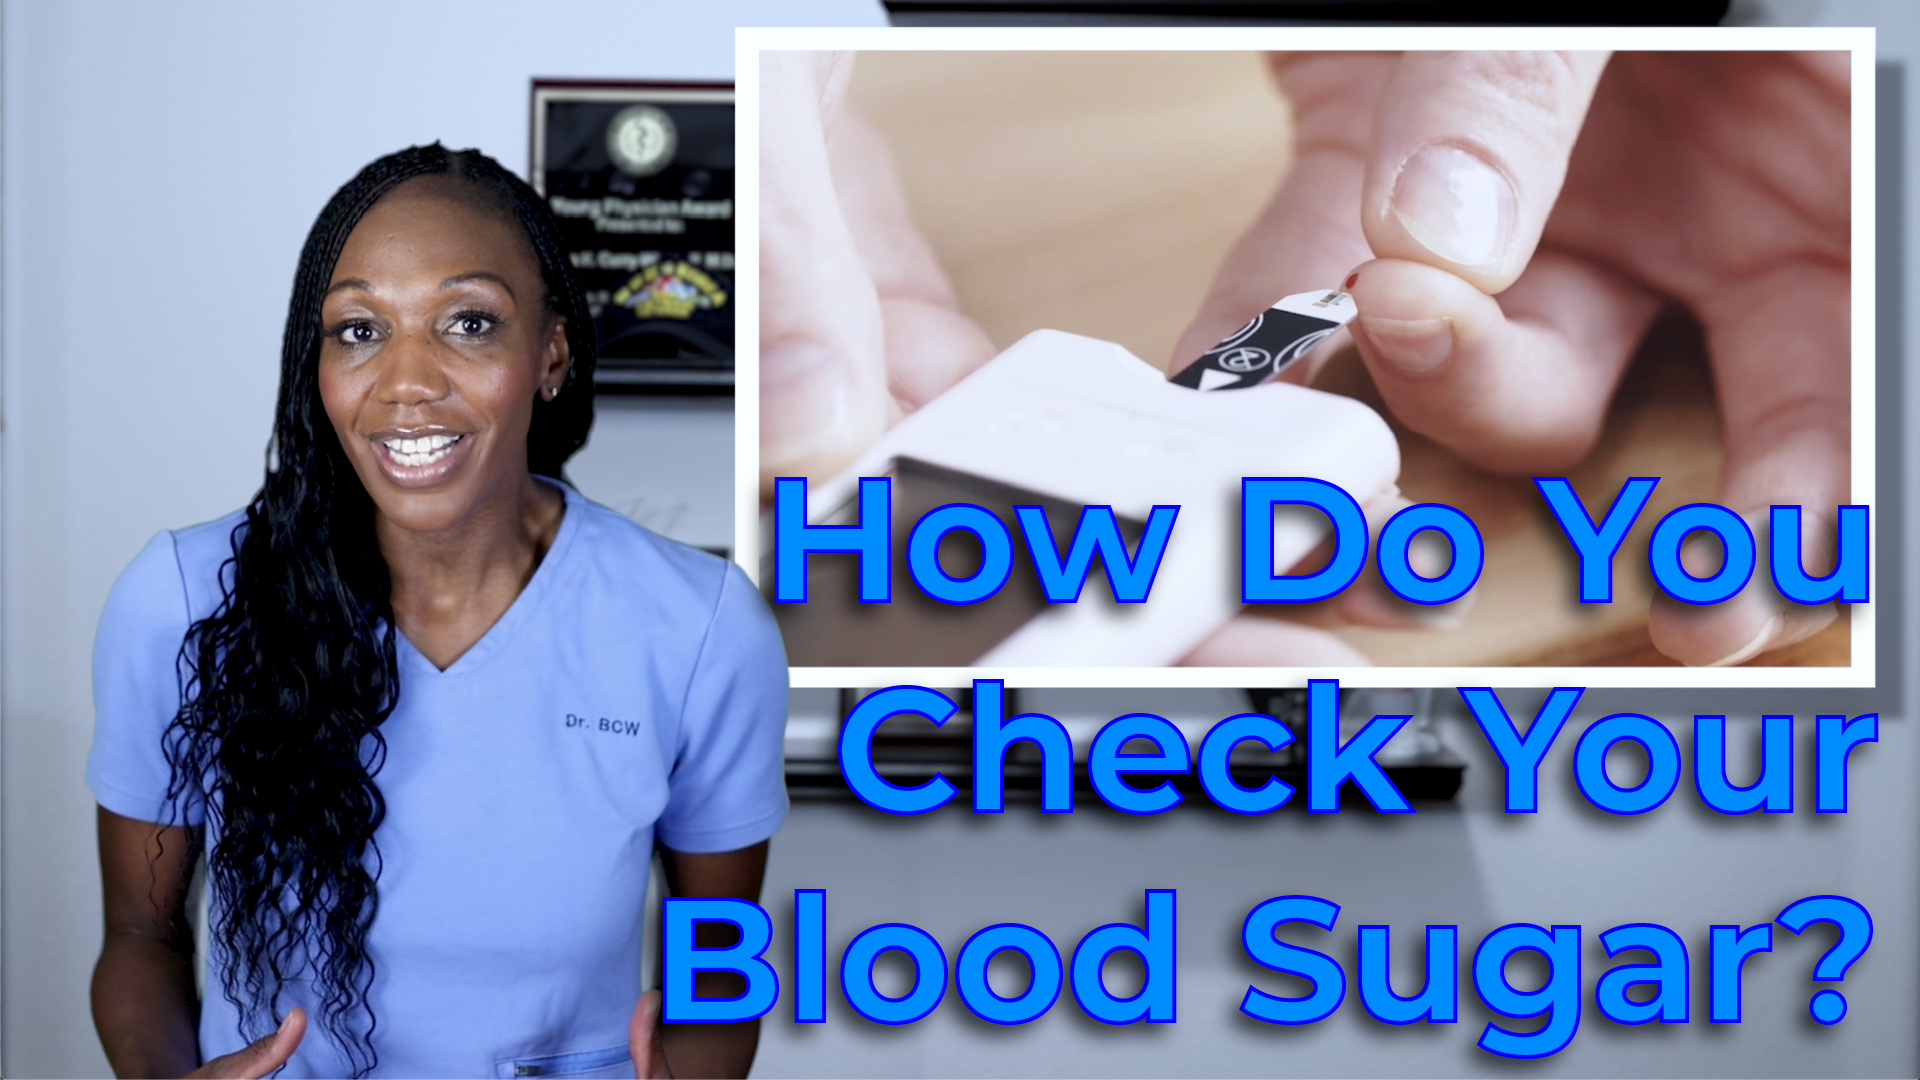 How do you check blood sugar?